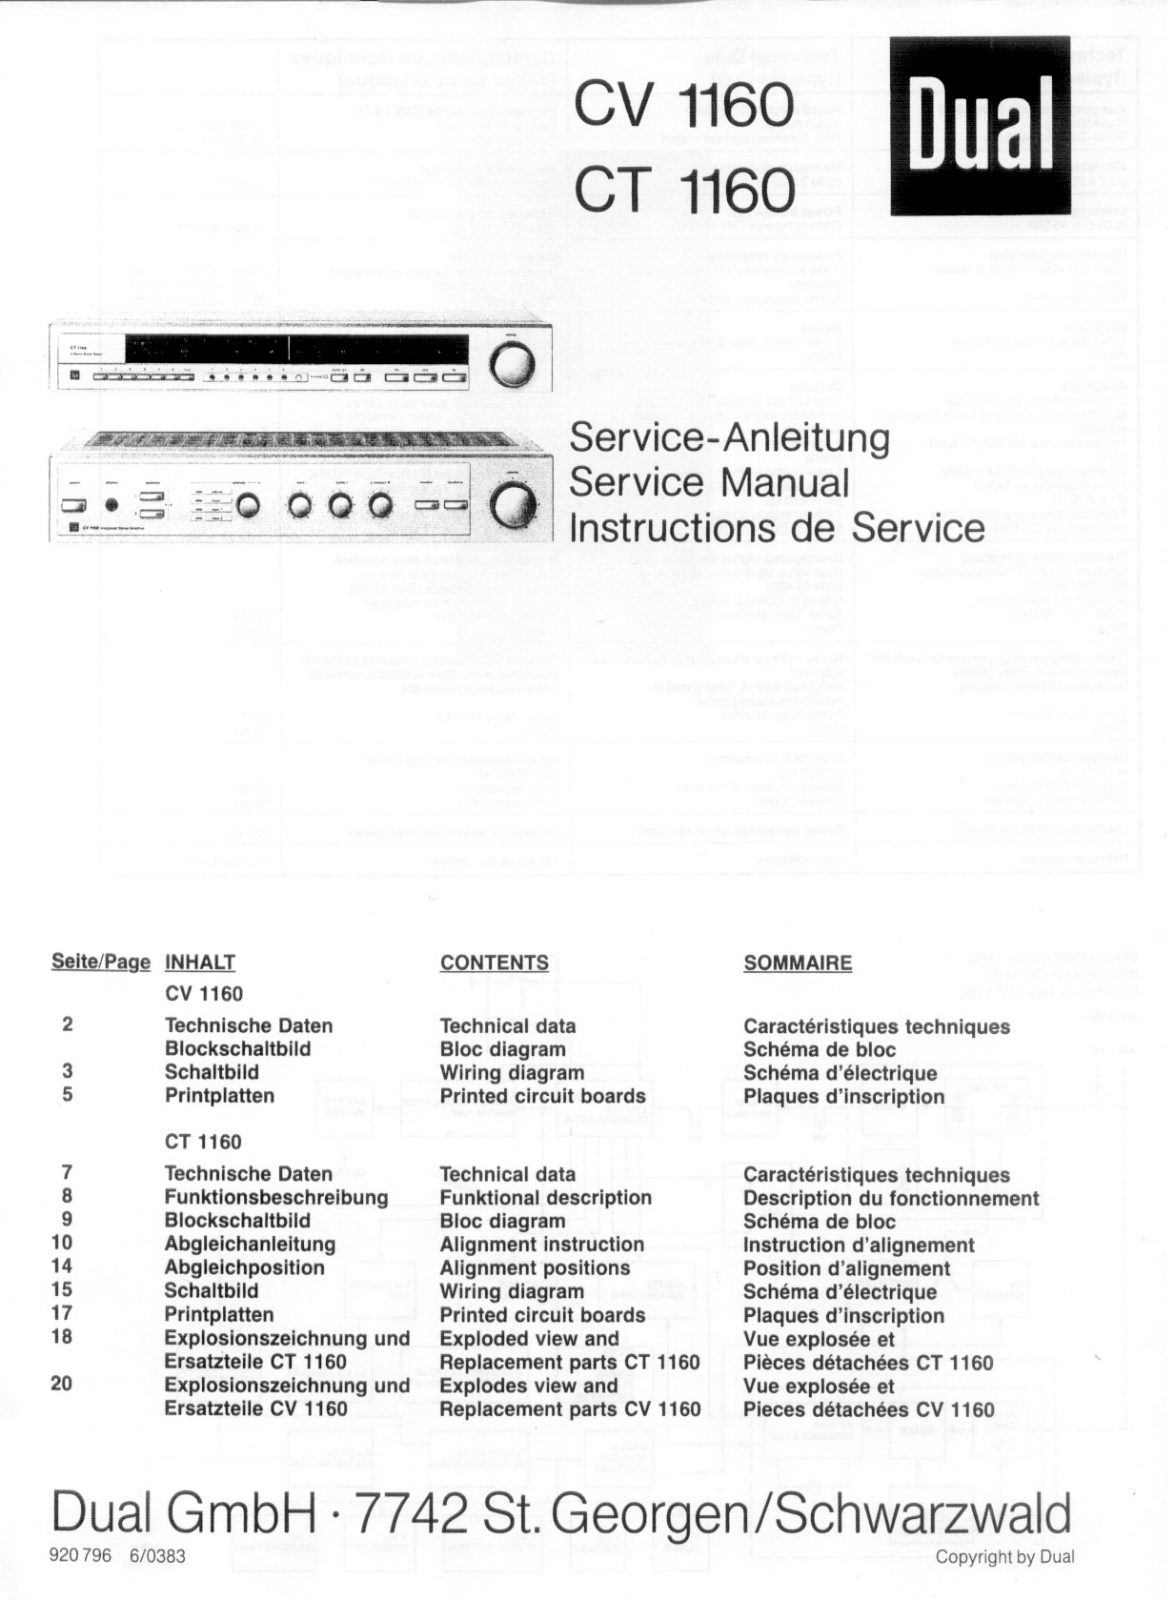 Dual CV-1160 Service Manual